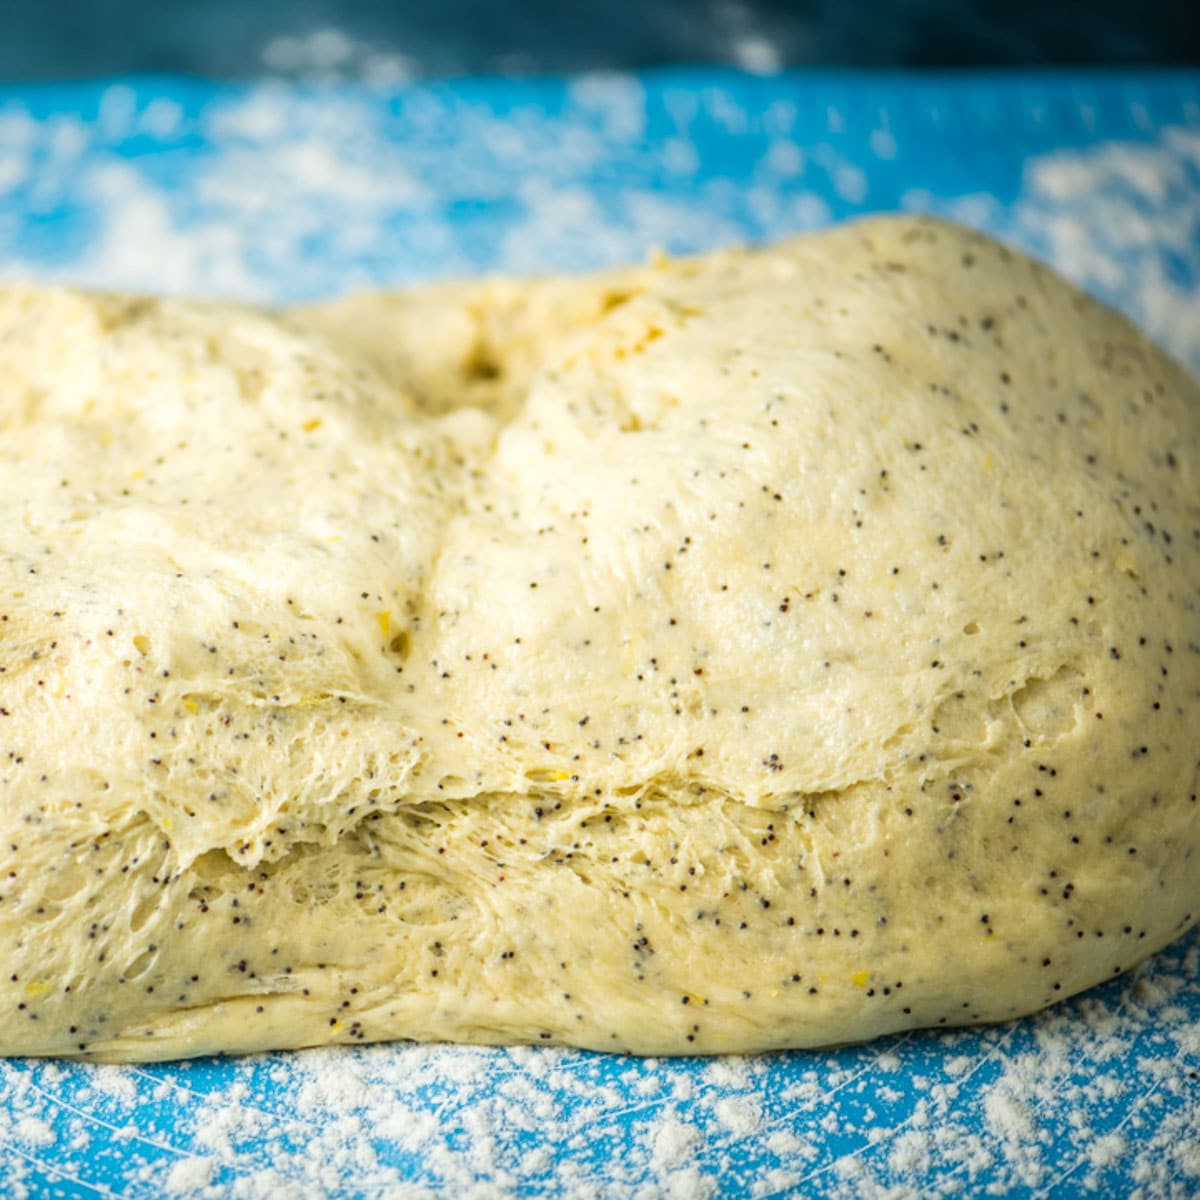 a lump of poppy seed dough